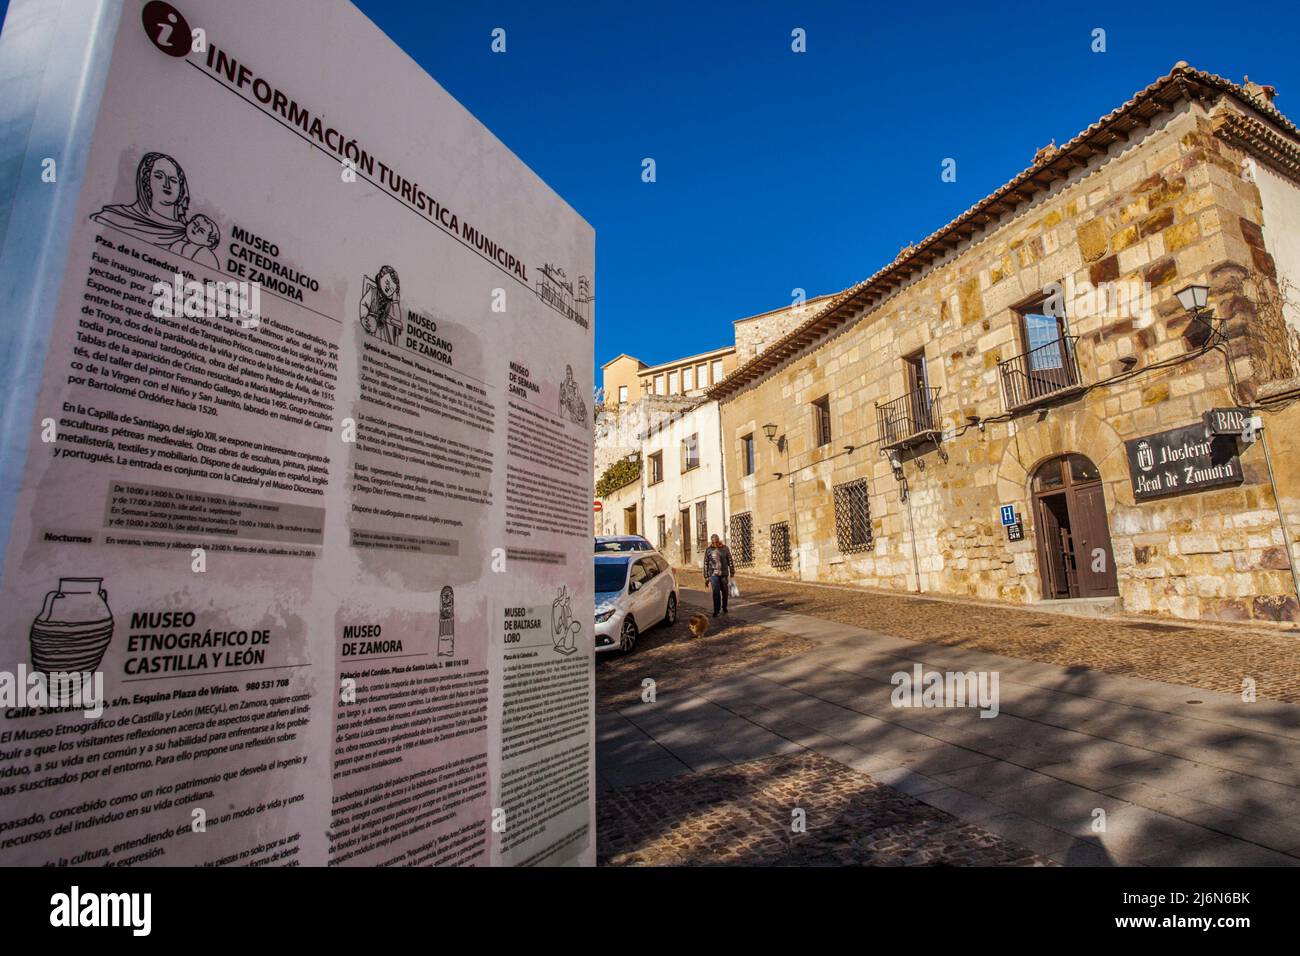 Tourist information poster, Hosteria Real de Zamora, Cuesta de Pizarro street, Zamora city, Zamora Provience, Castile and Leon, Spain, Europe. Stock Photo